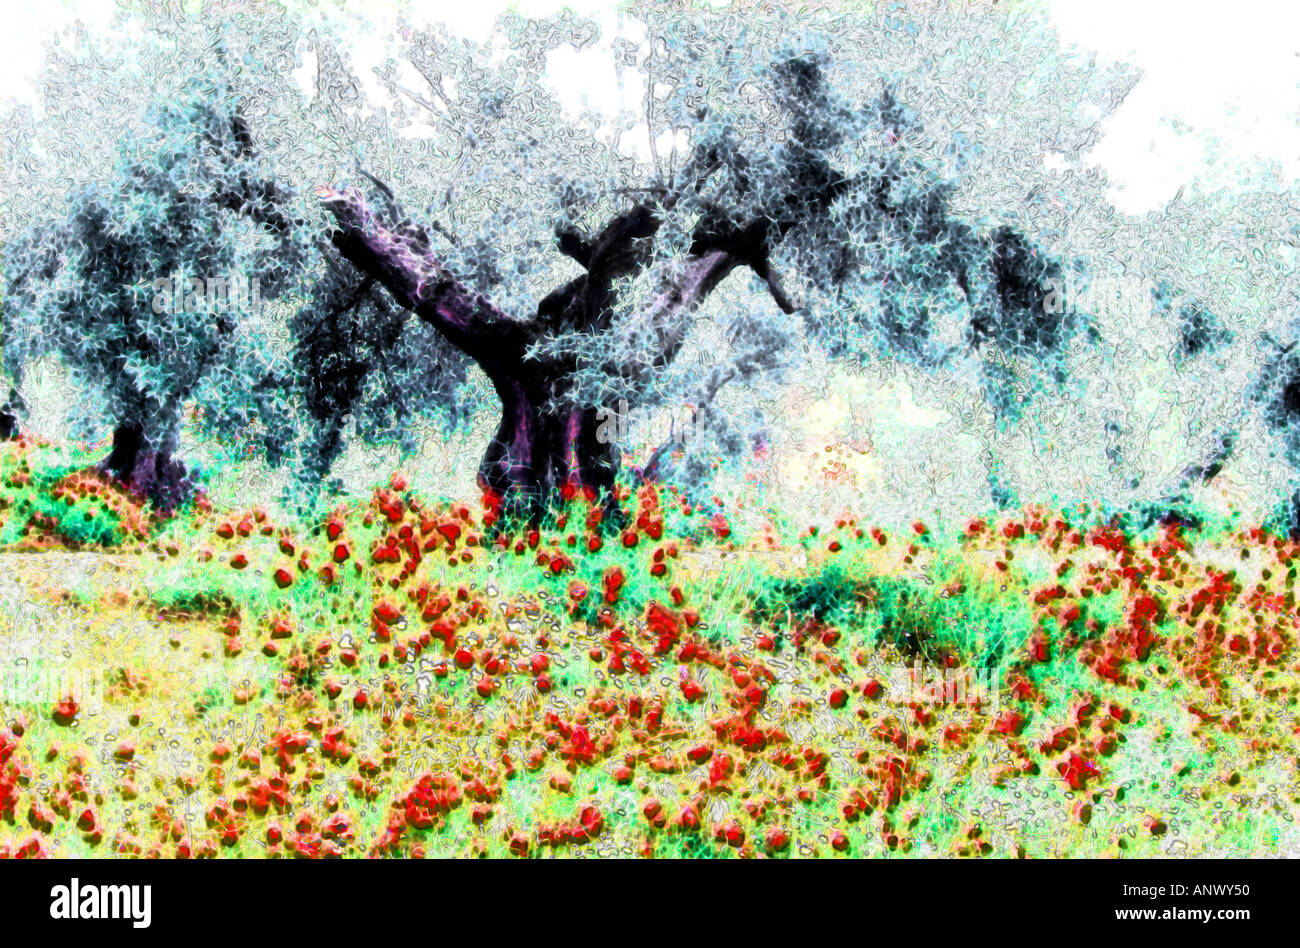 Olivenbaum Foto Illustration Konzept Abstract mit roten Mohnblumen Stockfoto